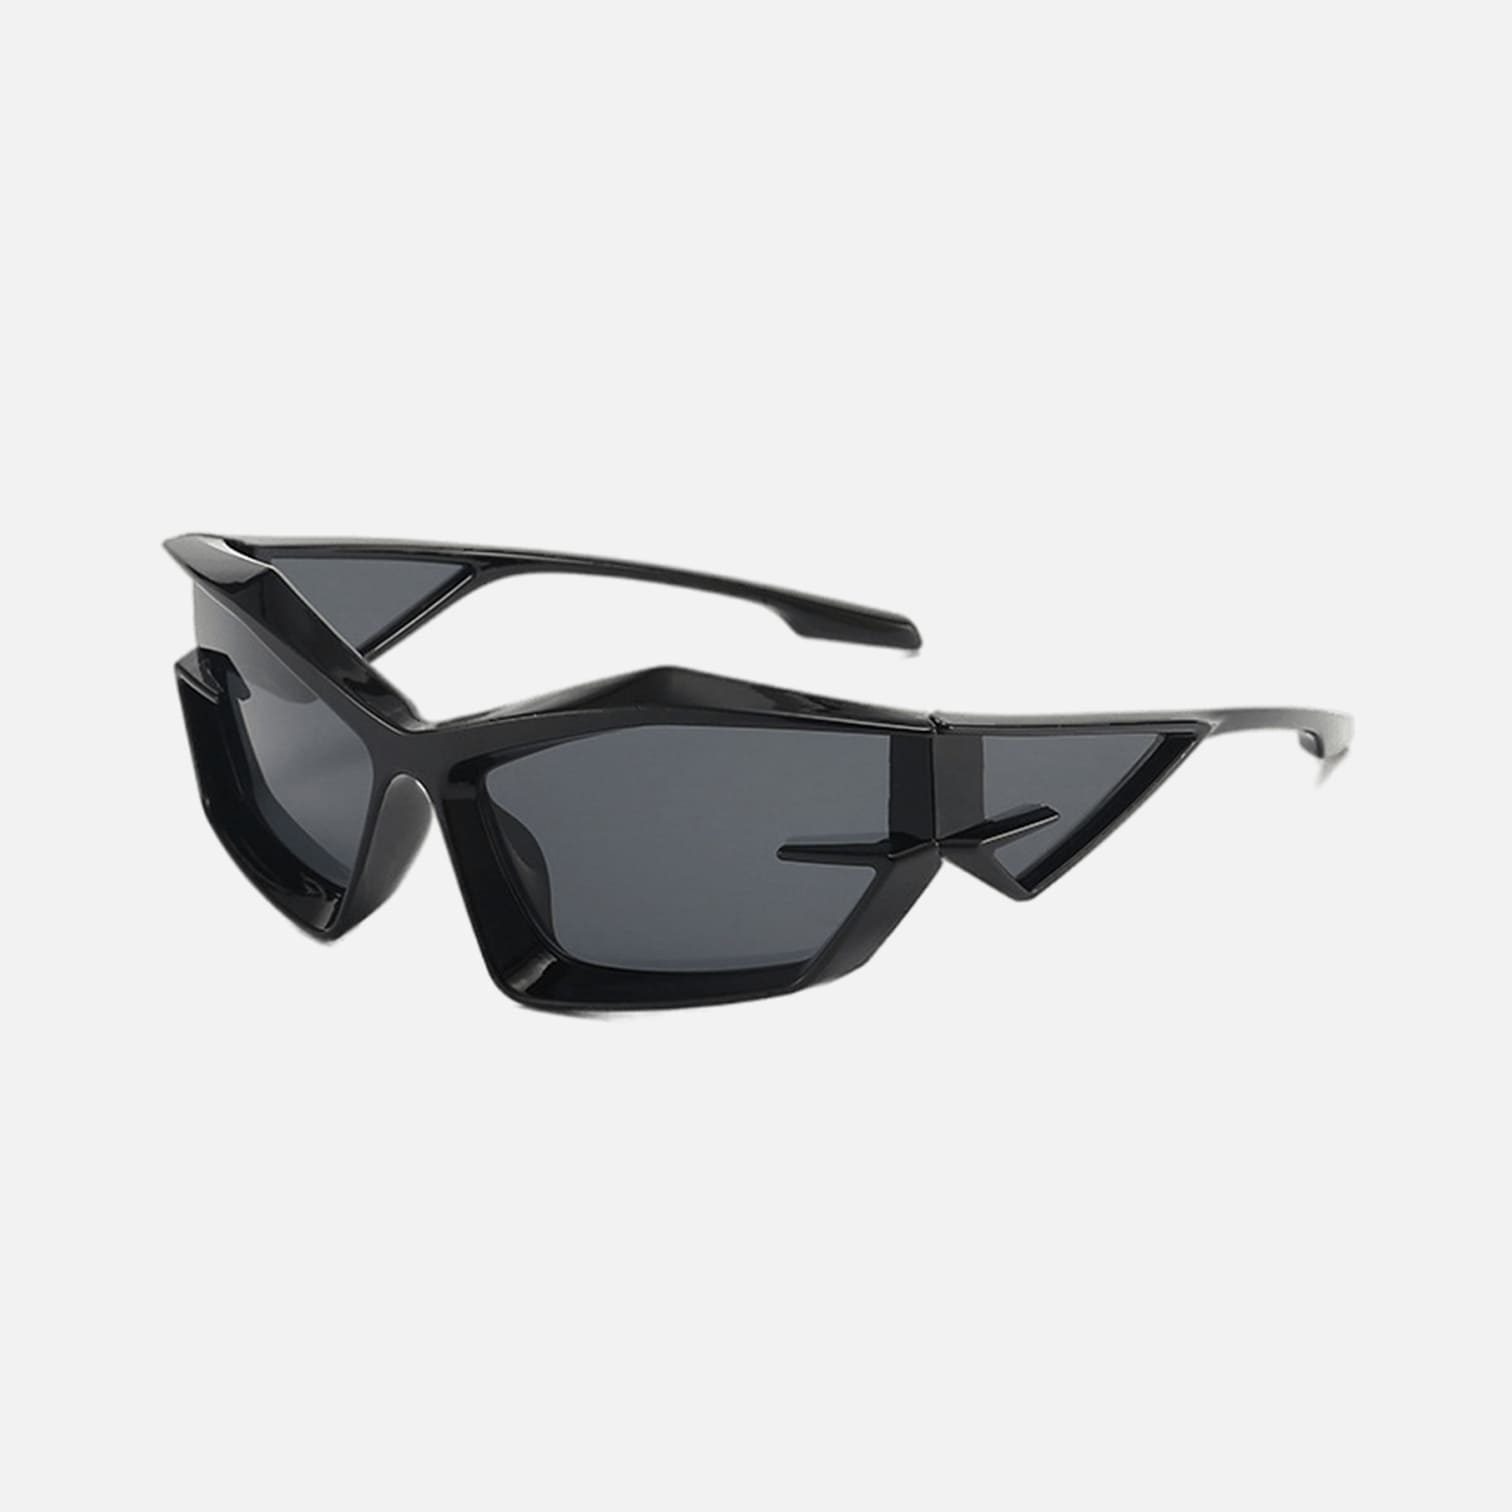 Men Sunglasses Fashion Design Tortoise Black Frame Hip Hop Style